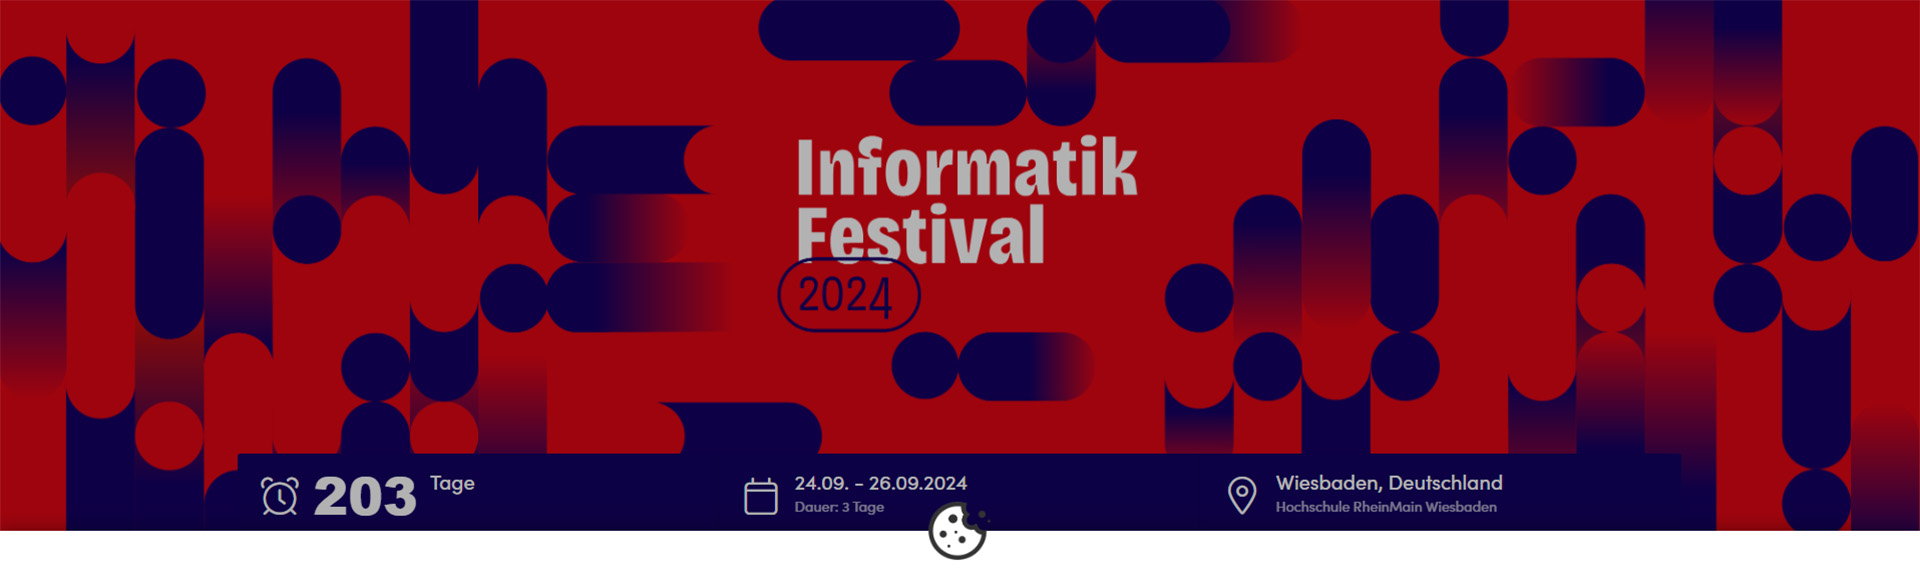 Informatik Festival 2024